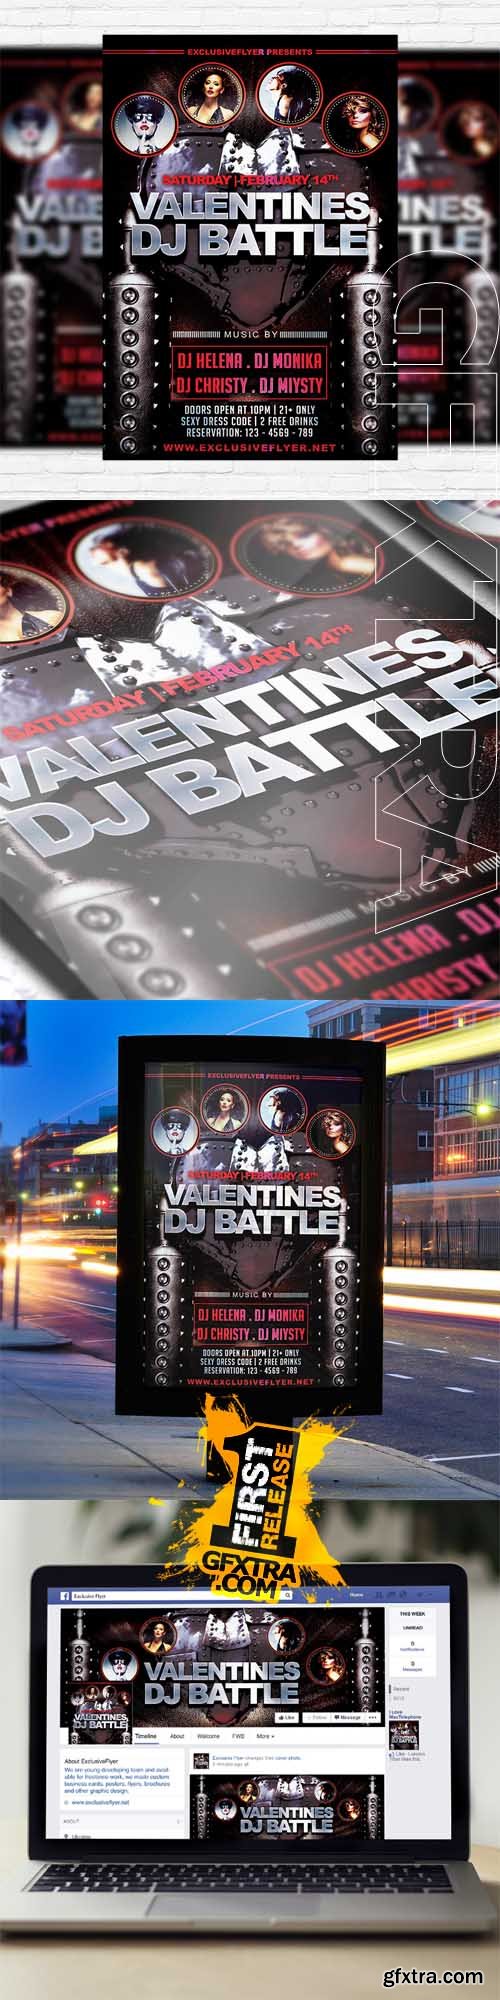 Valentines DJ Battle – Flyer Template + Facebook Cover